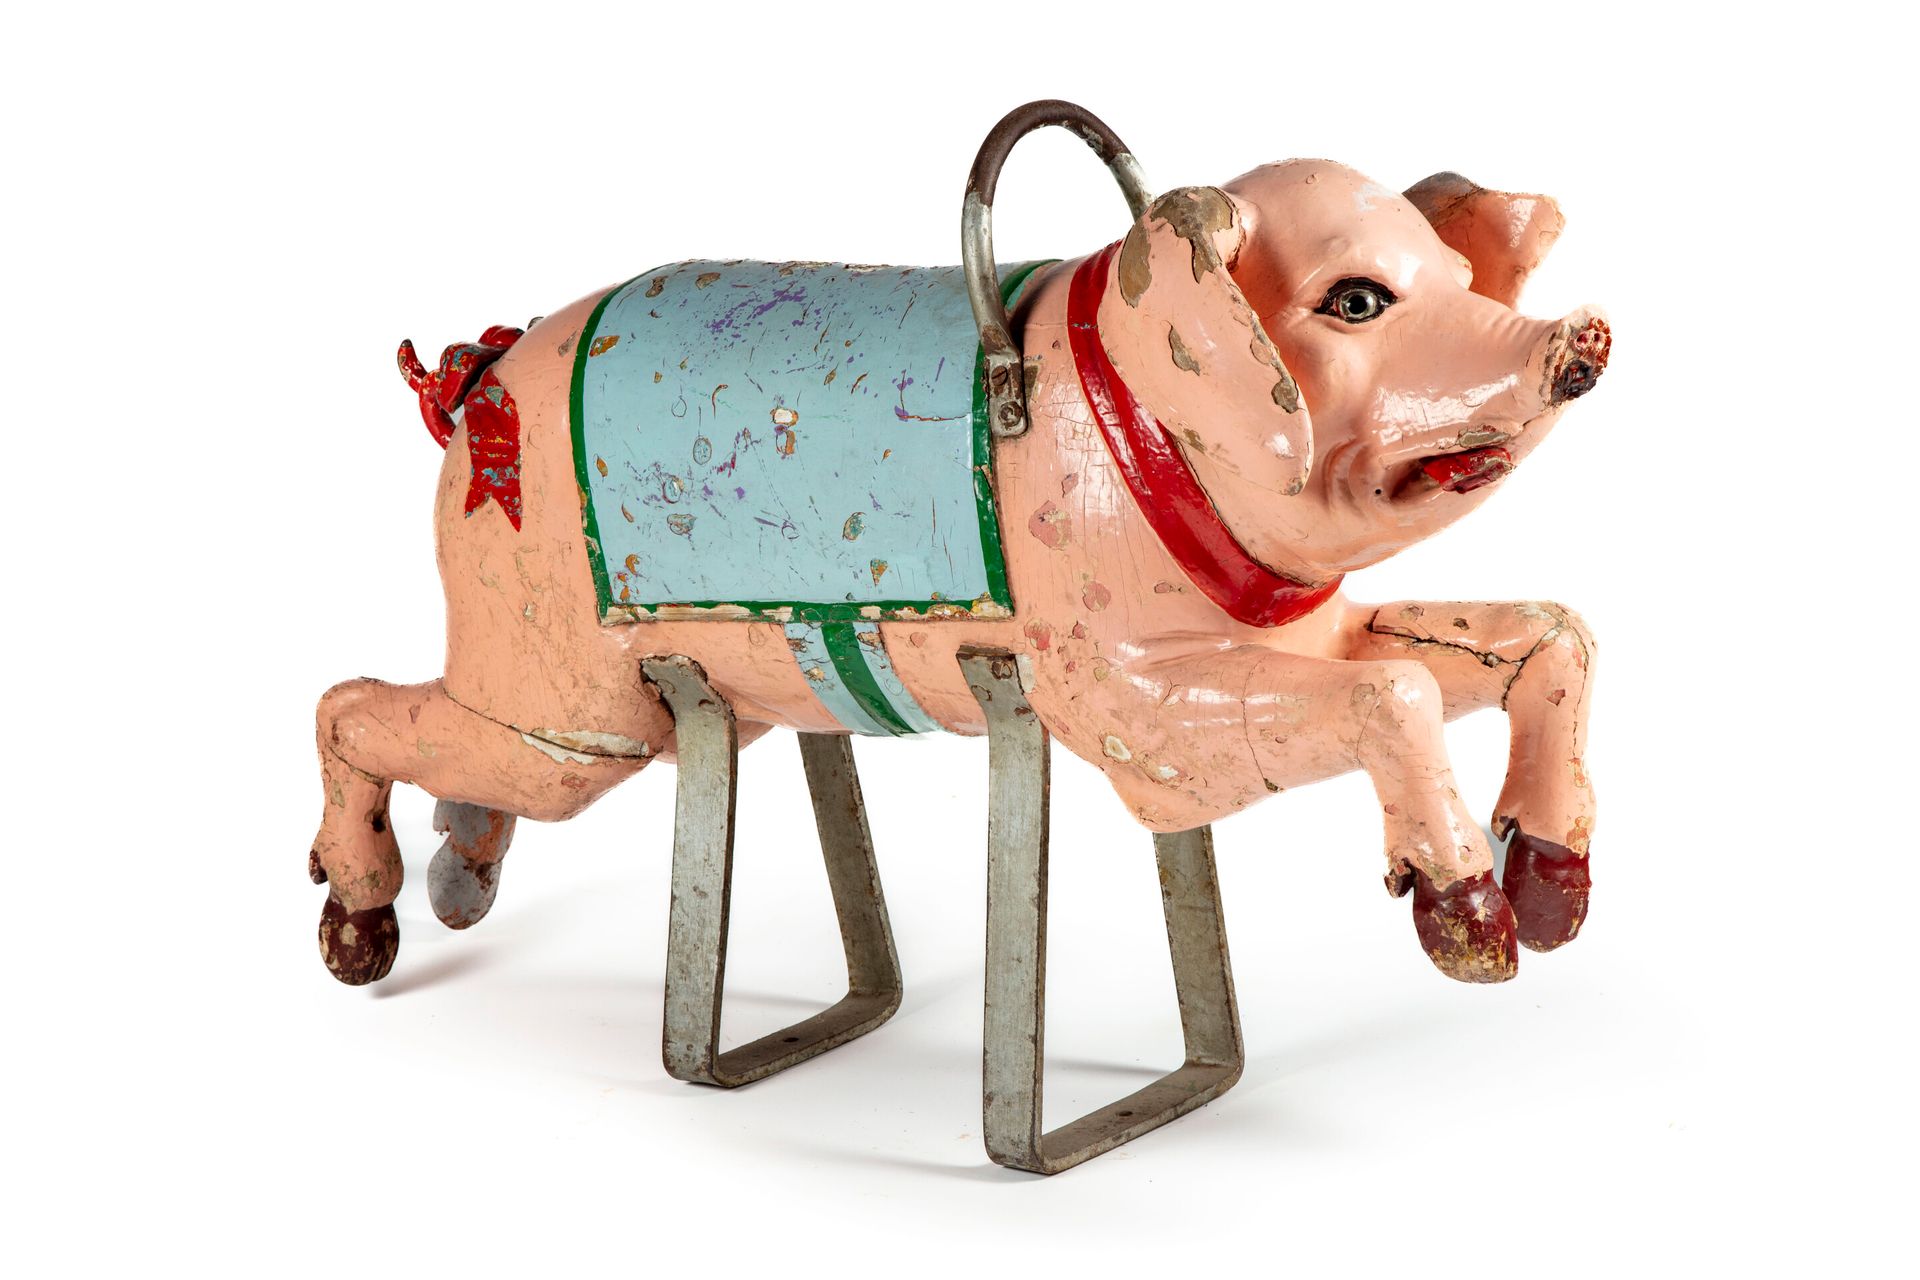 Null 无名氏 - 在古斯塔夫-巴约尔的品味中

多色雕刻的木猪，铁柄和尾巴以及玻璃眼睛，形成一个旋转木马的主题

20世纪上半叶

H.64 cm; W. &hellip;